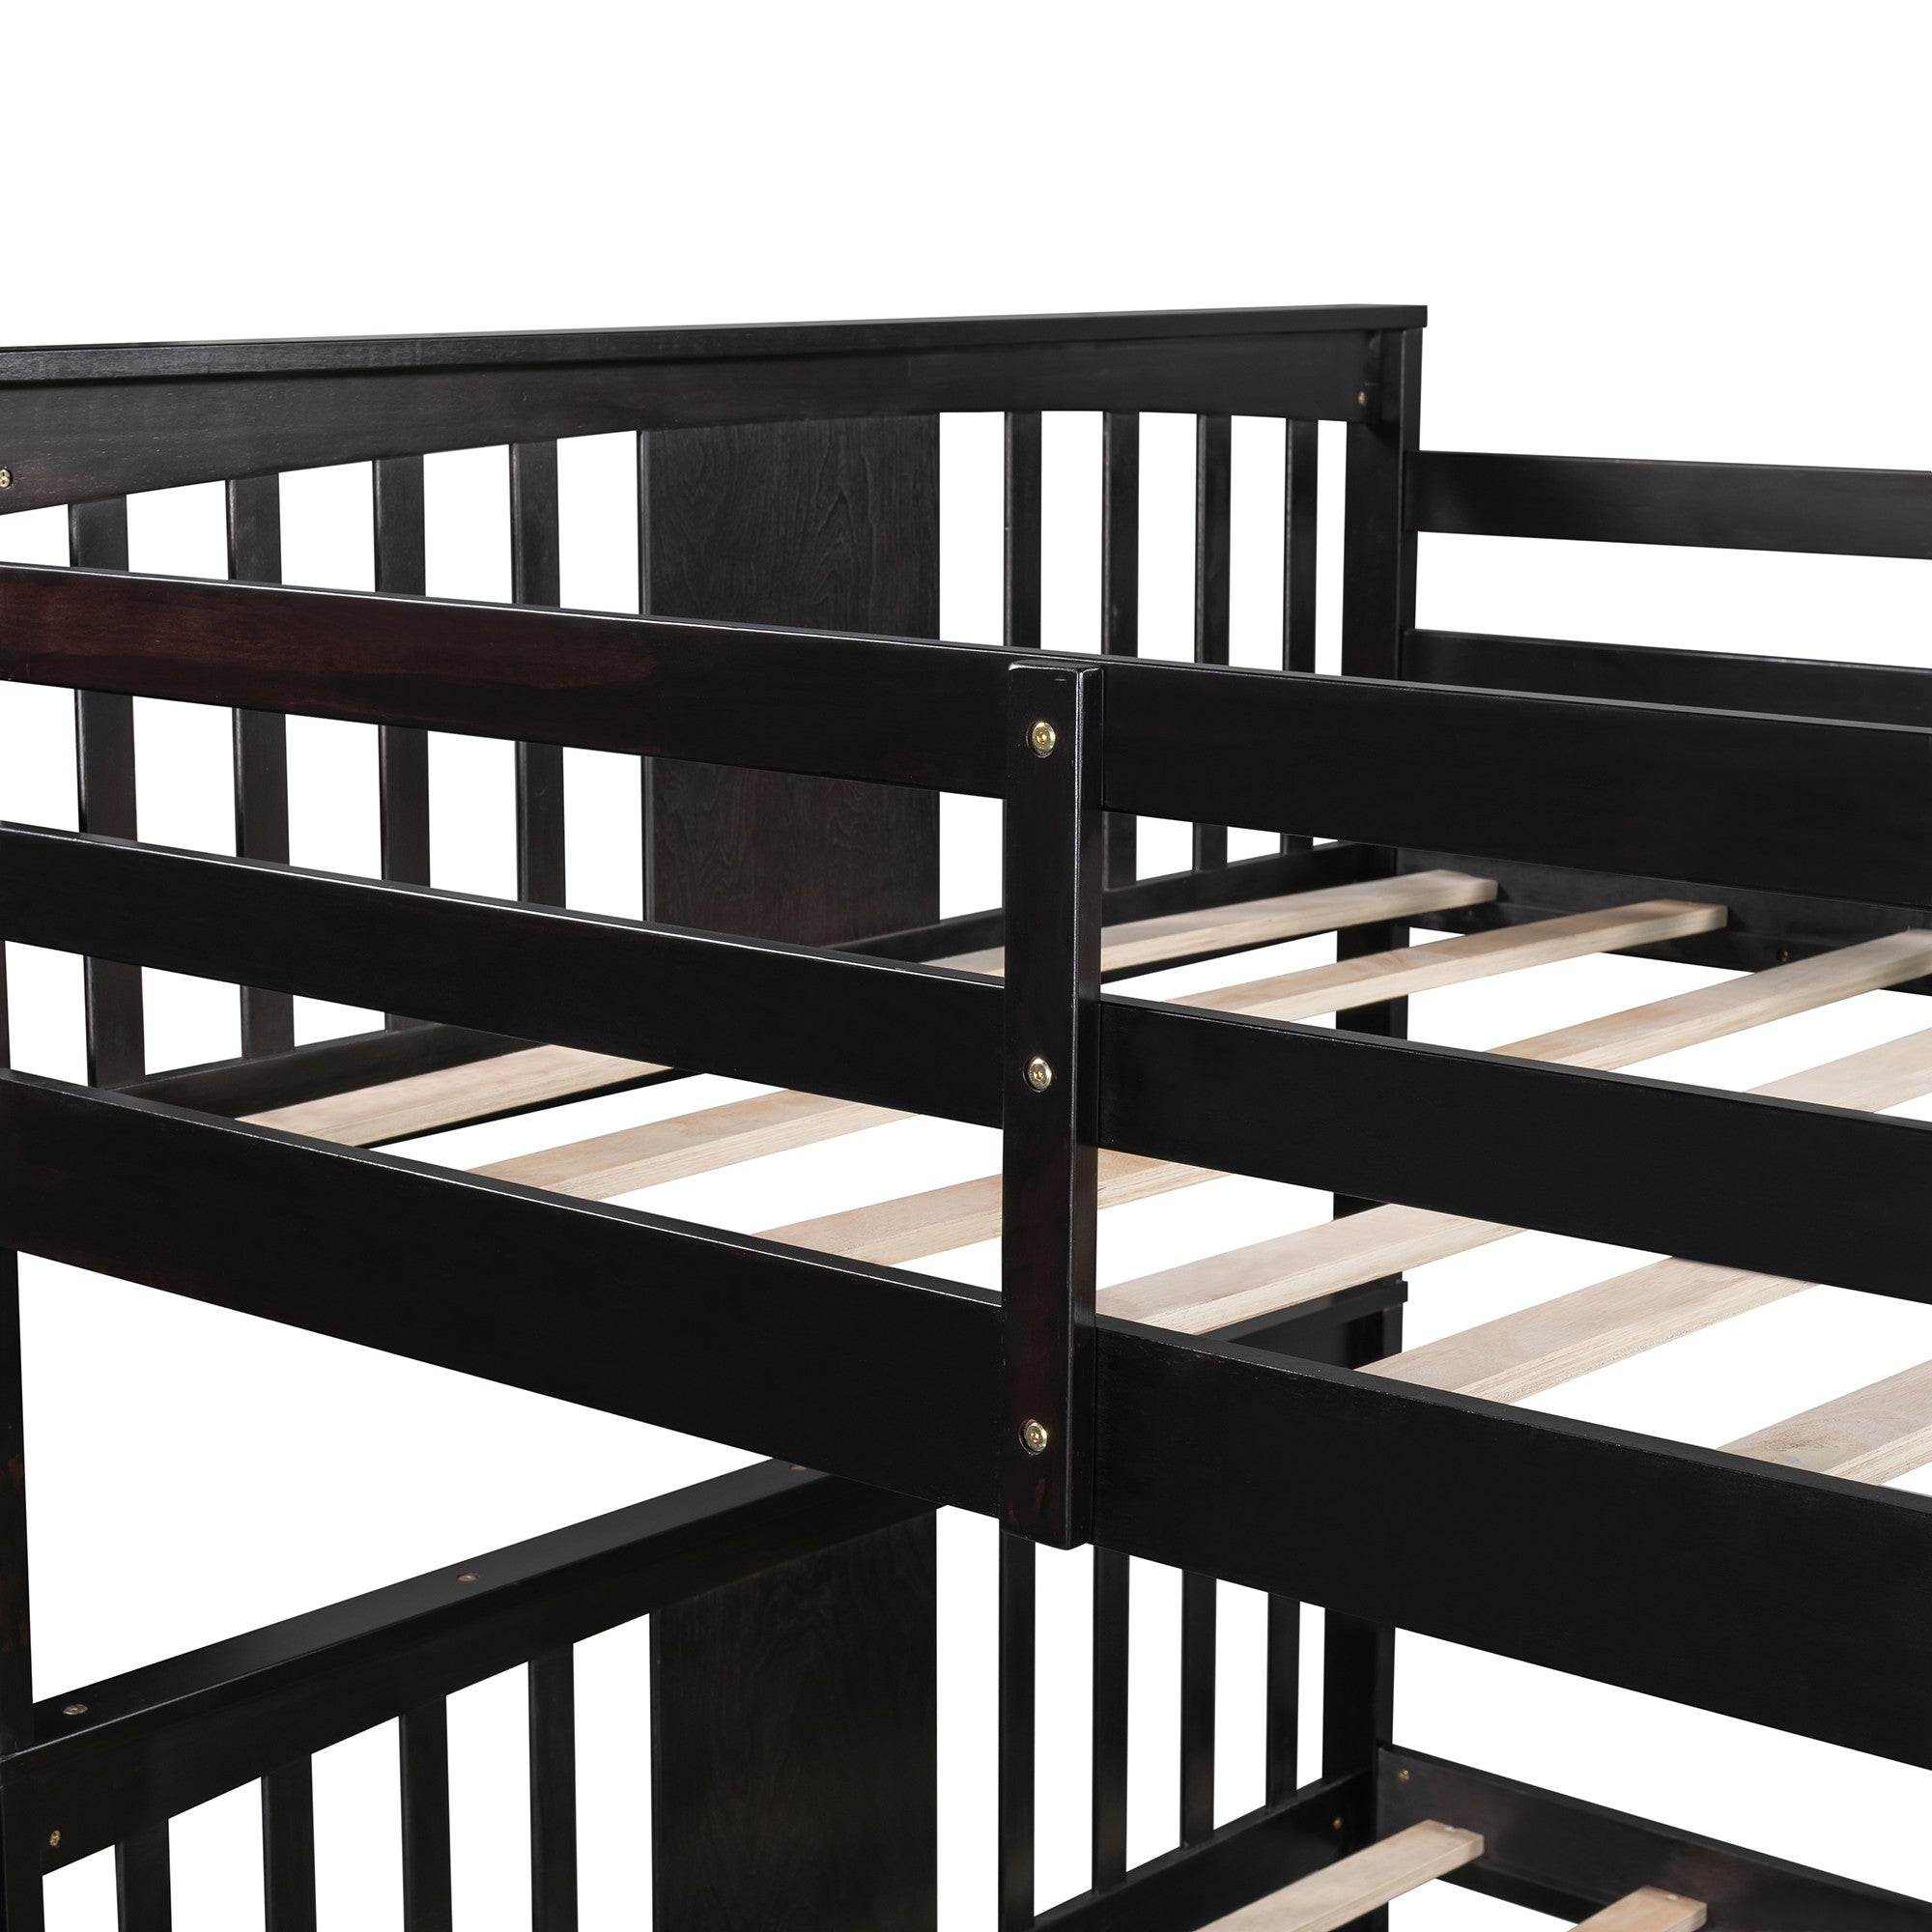 Full over Full Bunk Bed with  Ladder for Bedroom Guest Room Furniture-Espresso Default Title